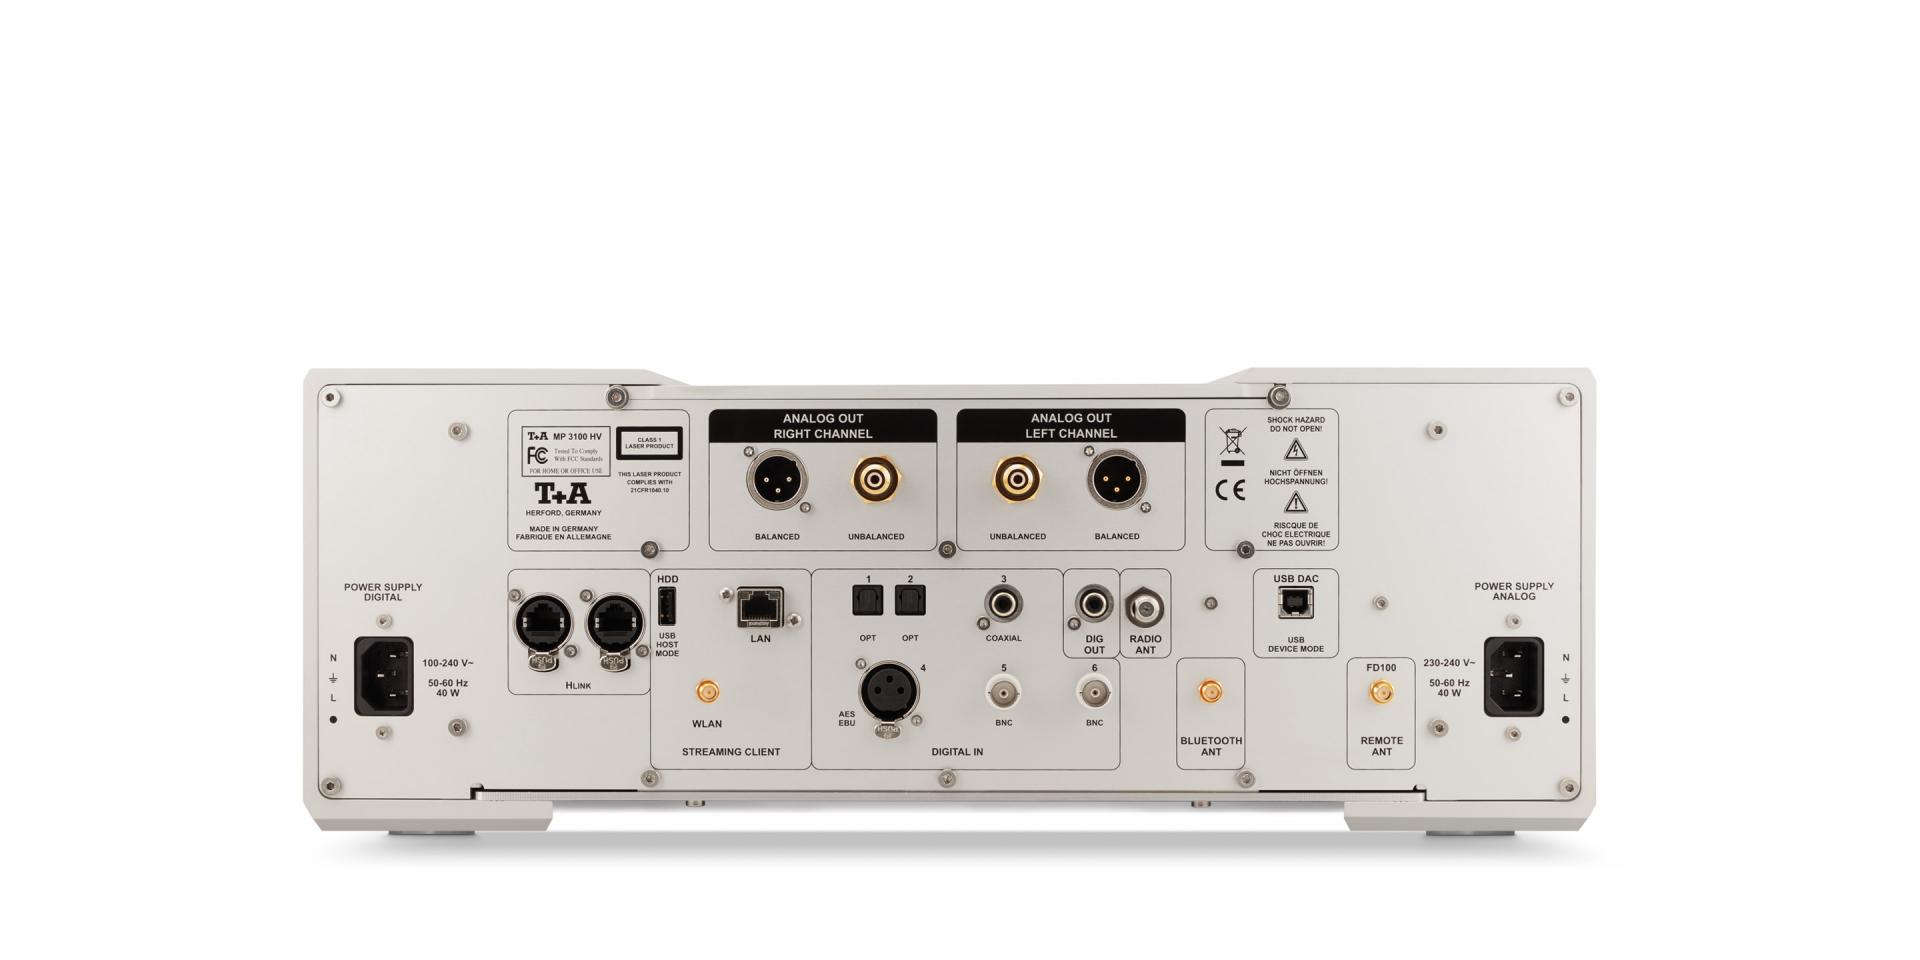 MP 3100 HV Multi-Source SACD Player